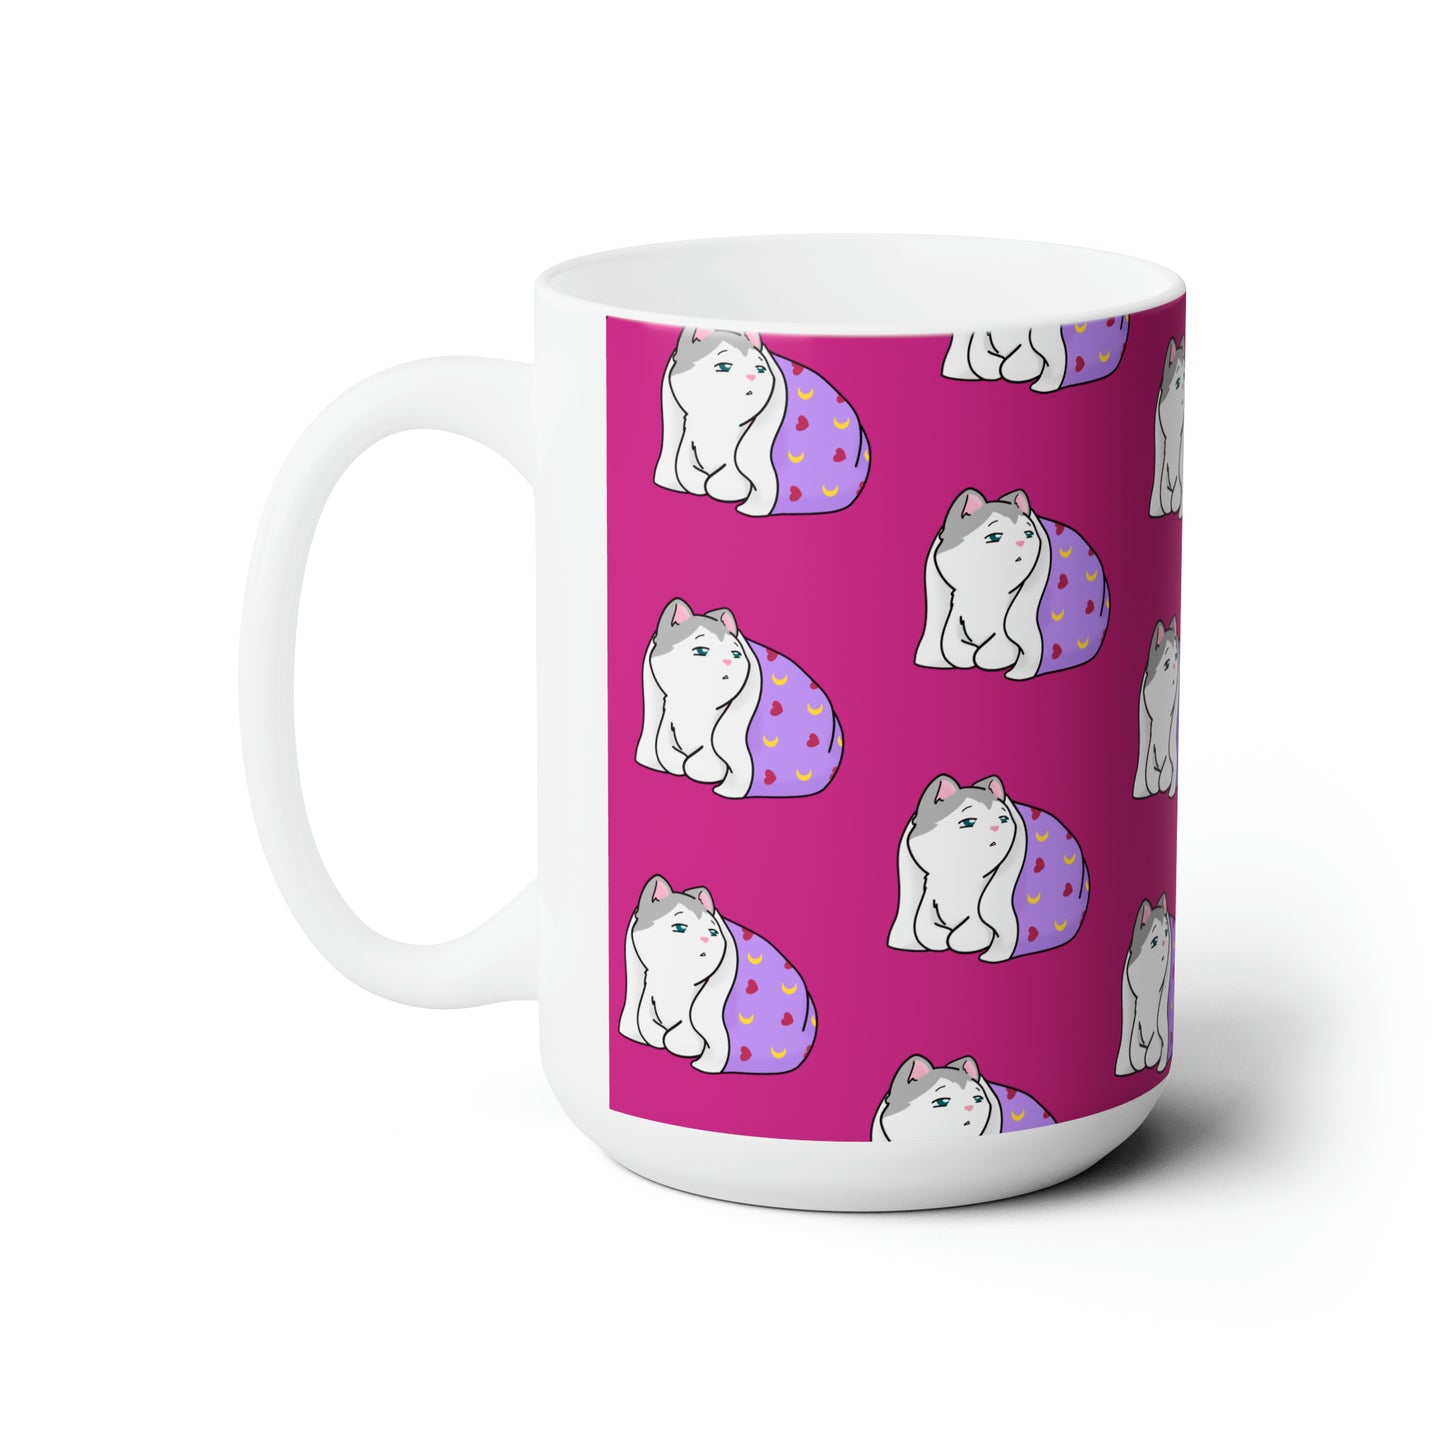 Sleepy Kitty Patterned Pink Ceramic Mug 15oz